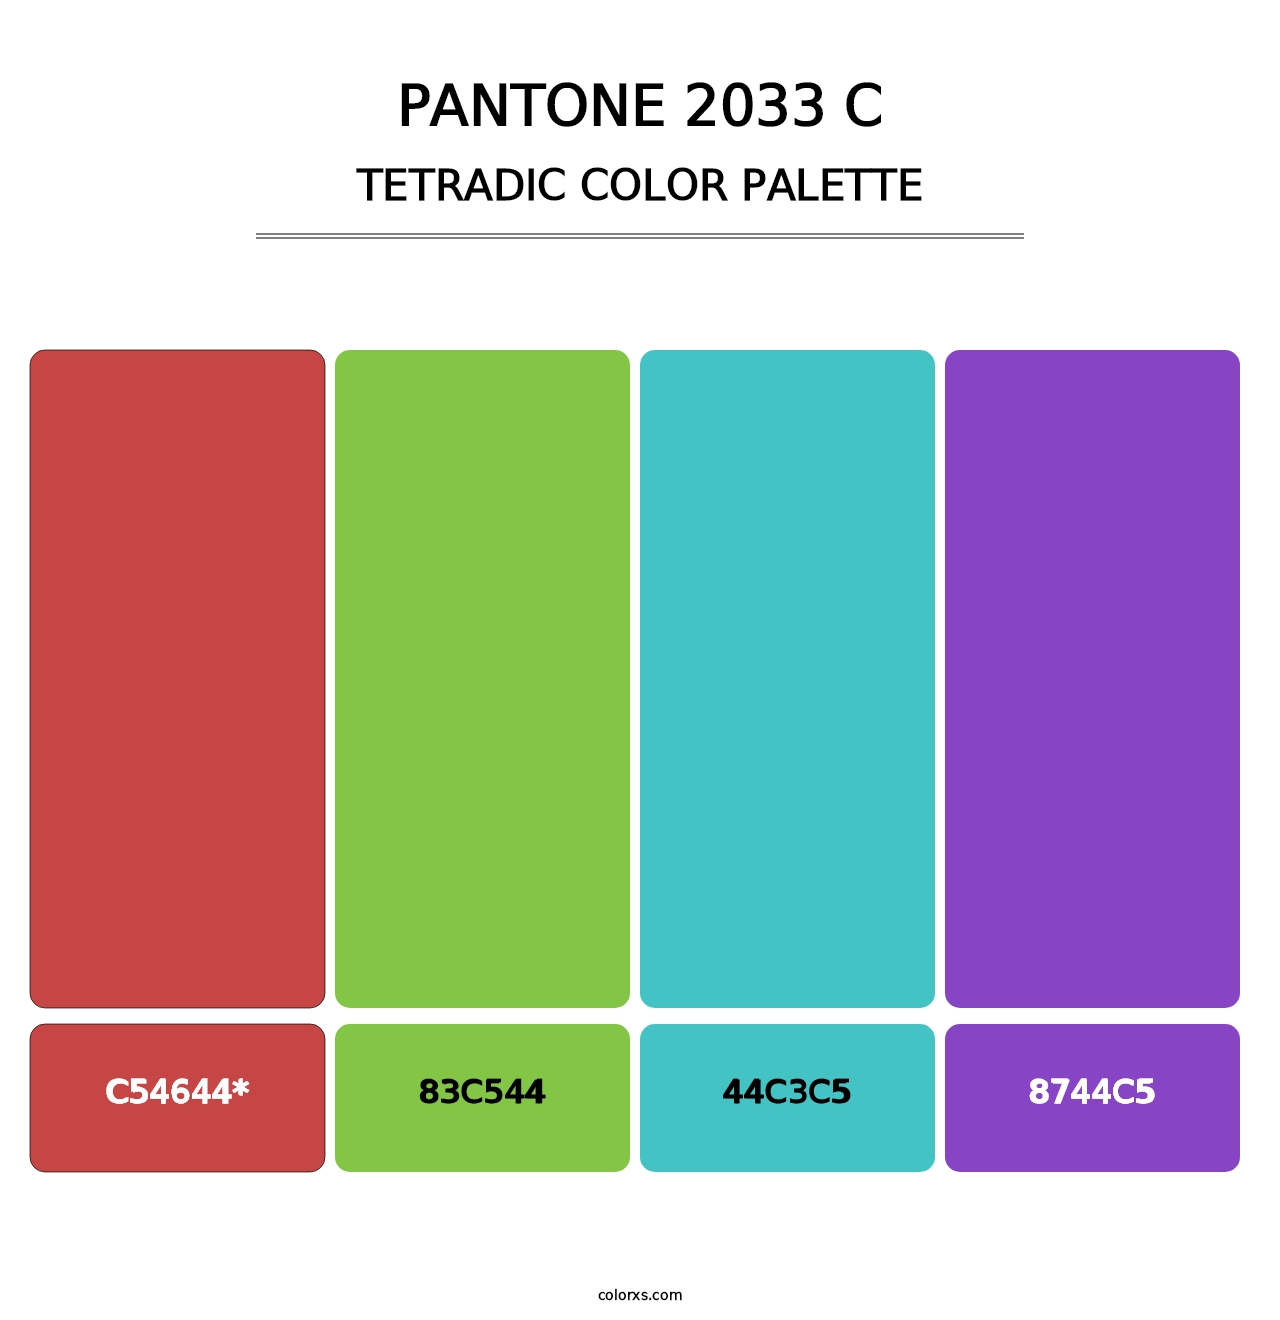 PANTONE 2033 C - Tetradic Color Palette